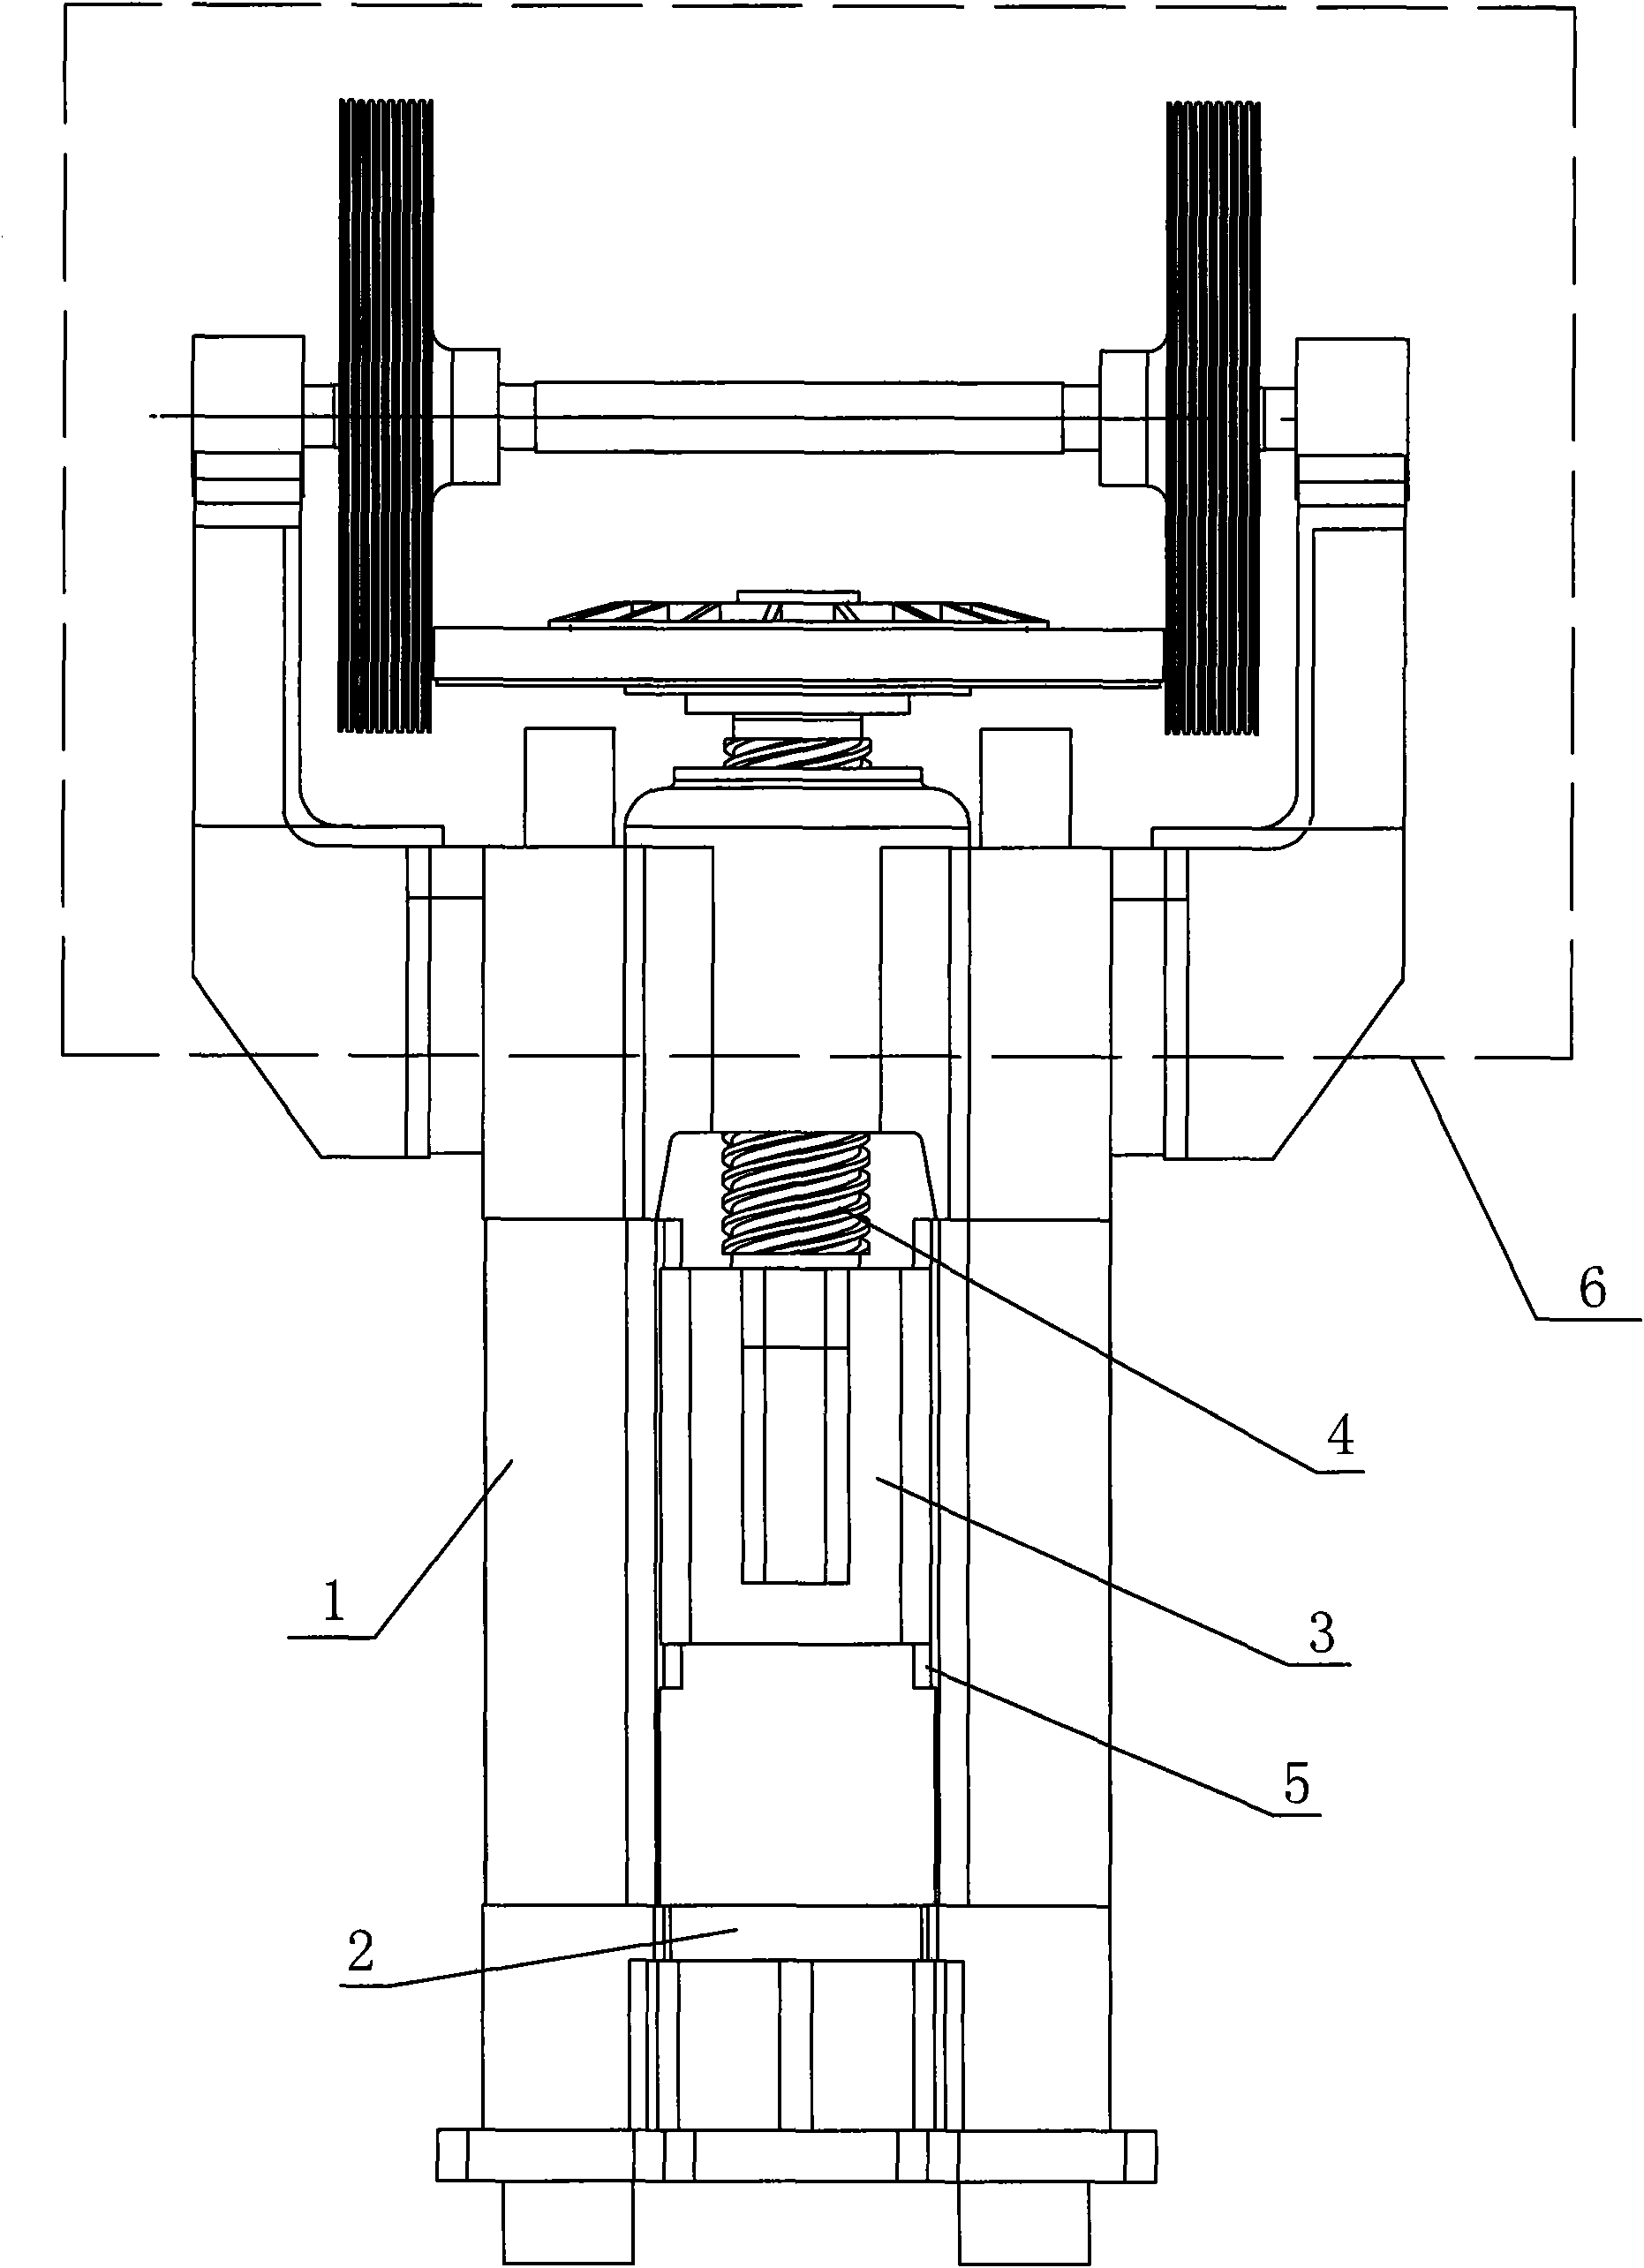 Multi-station friction screw press